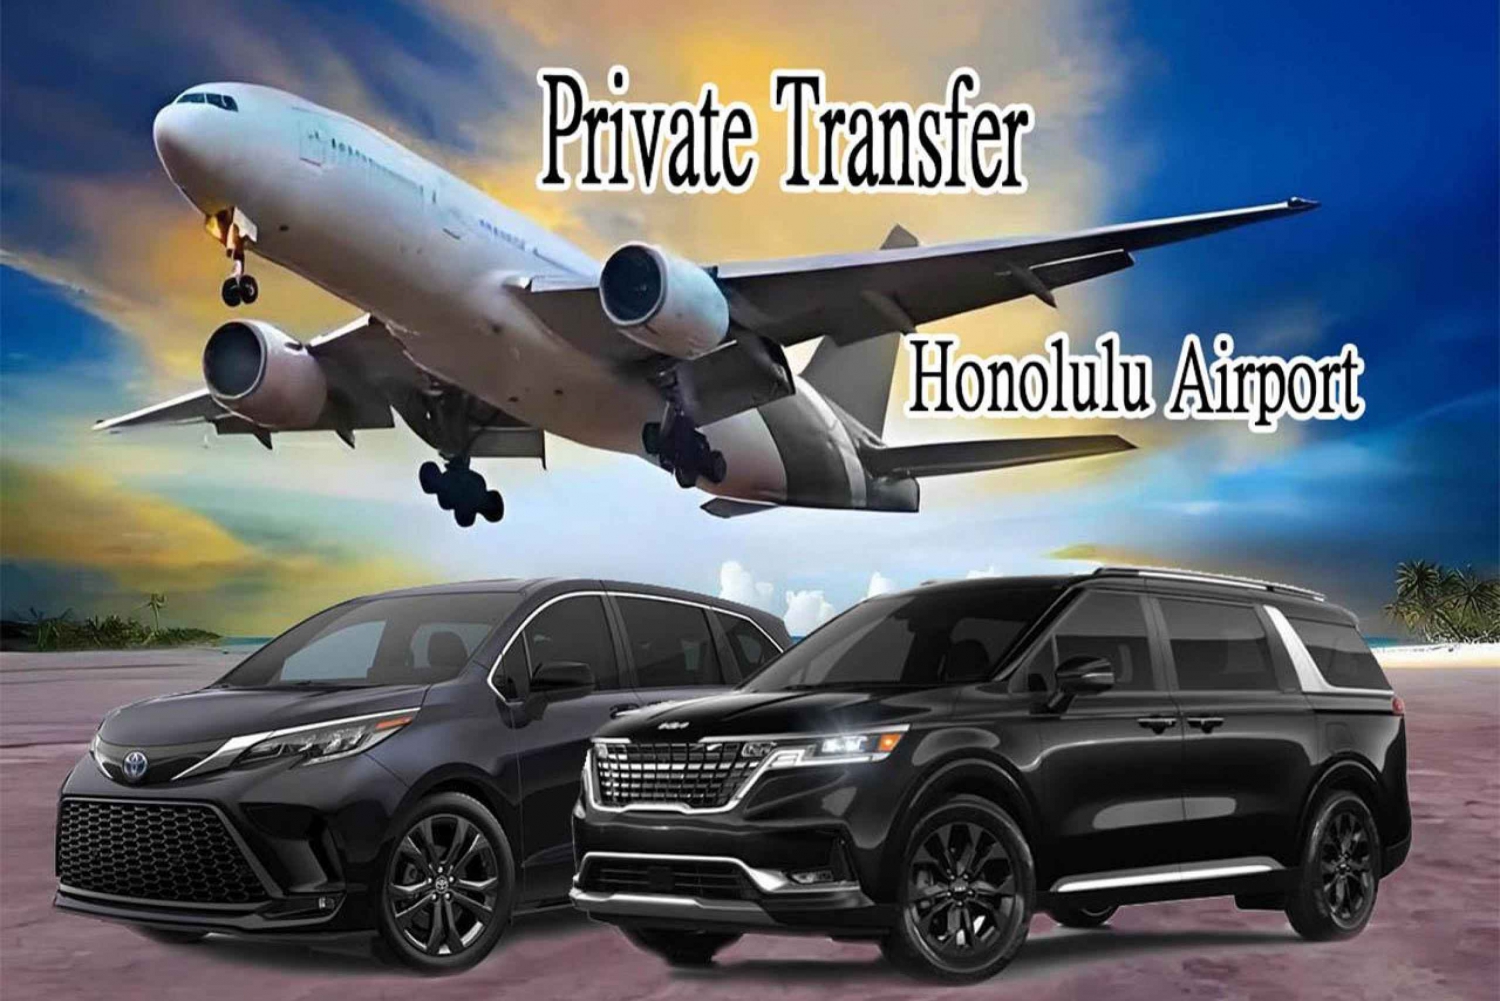 【ARRIVAL】Aeropuerto de Honolulu -Traslado privado a Waikiki